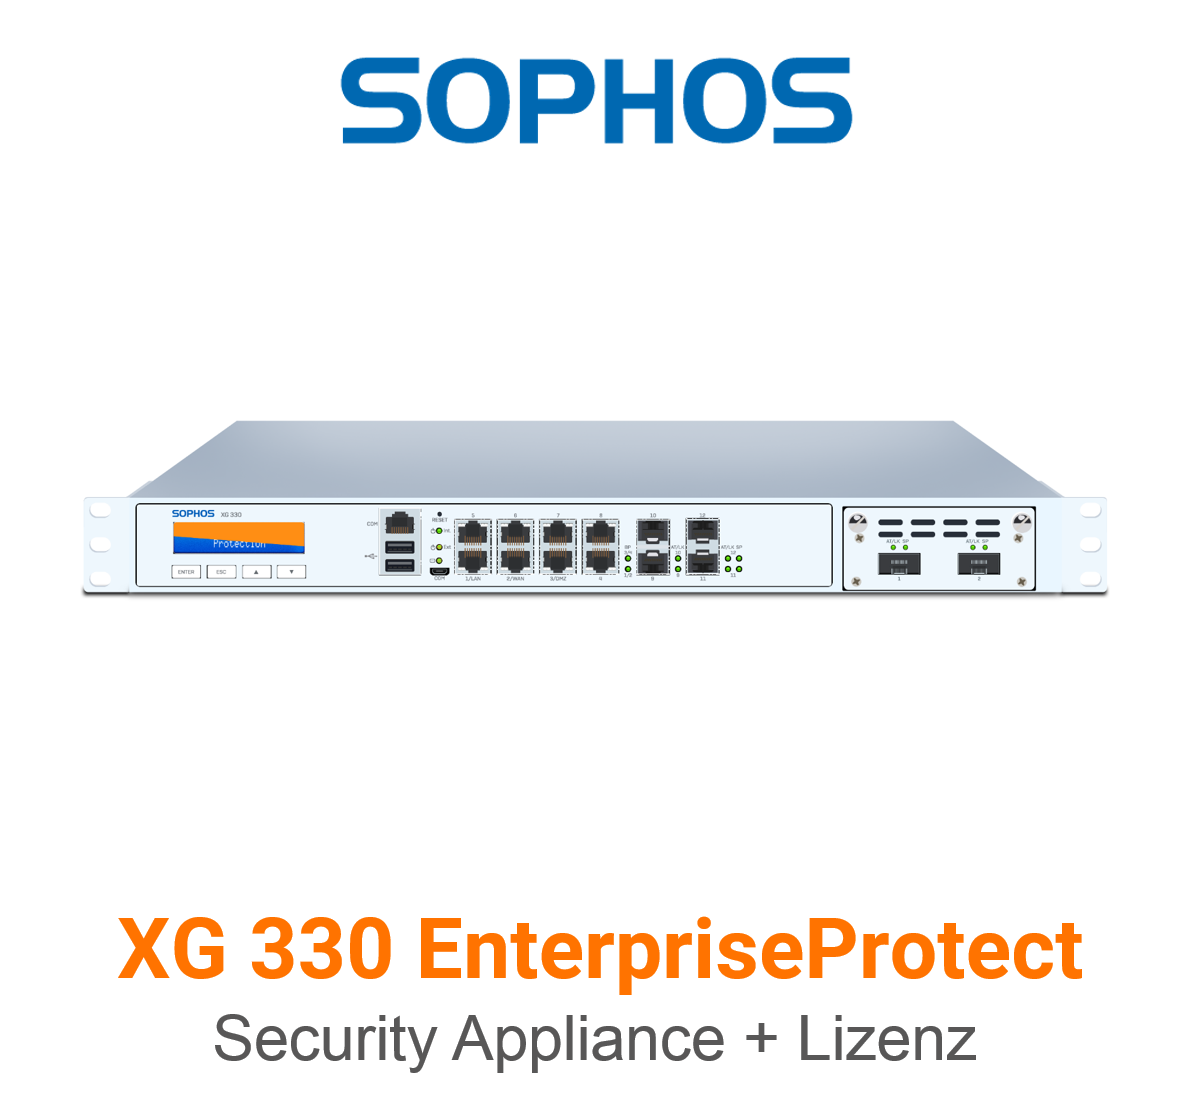 Sophos XG 330 EnterpriseProtect Bundle (Hardware + Lizenz) (End of Sale/Life)